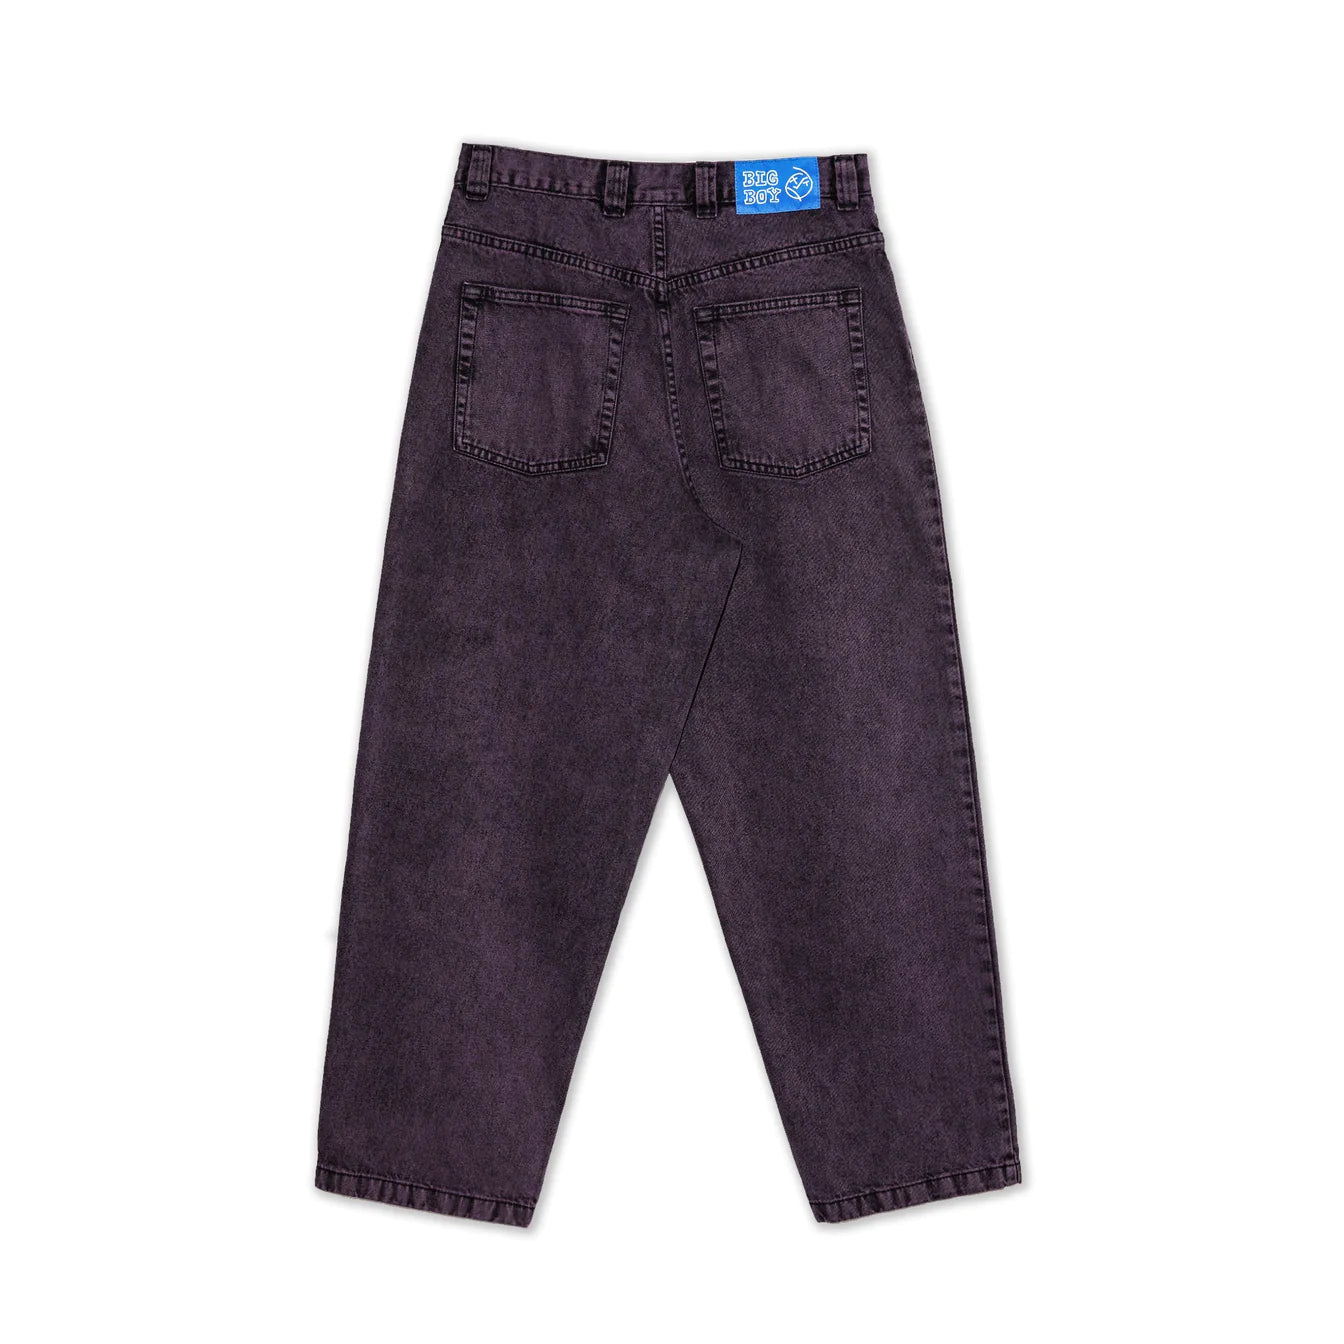 Polar Big Boy Pants - Purple/Black